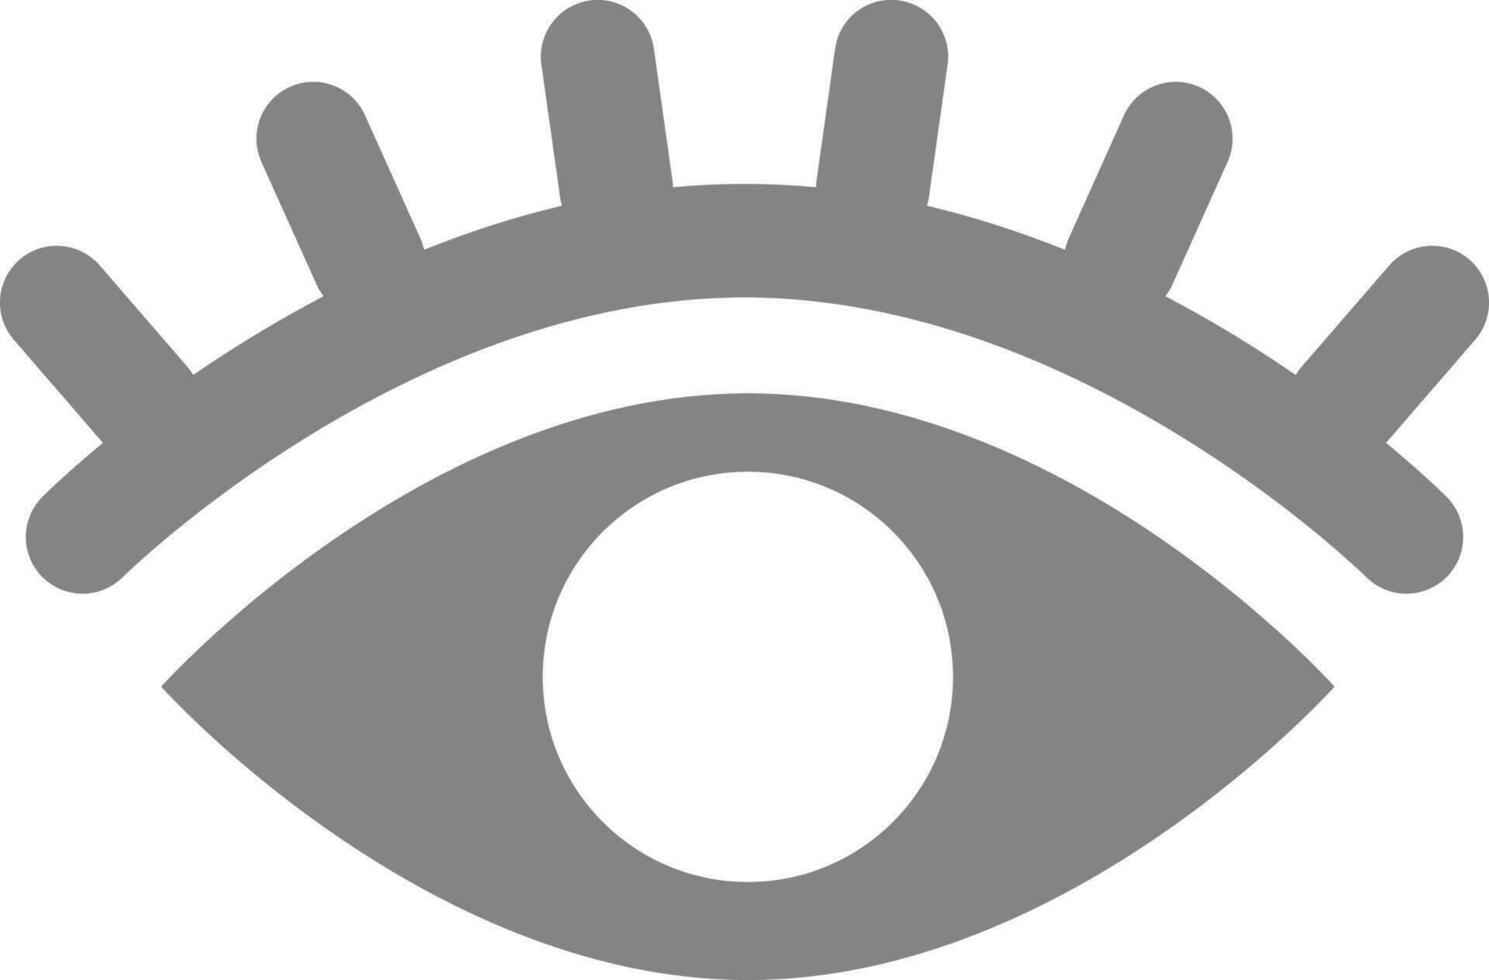 oog of visie icoon in grijs en wit kleur. vector